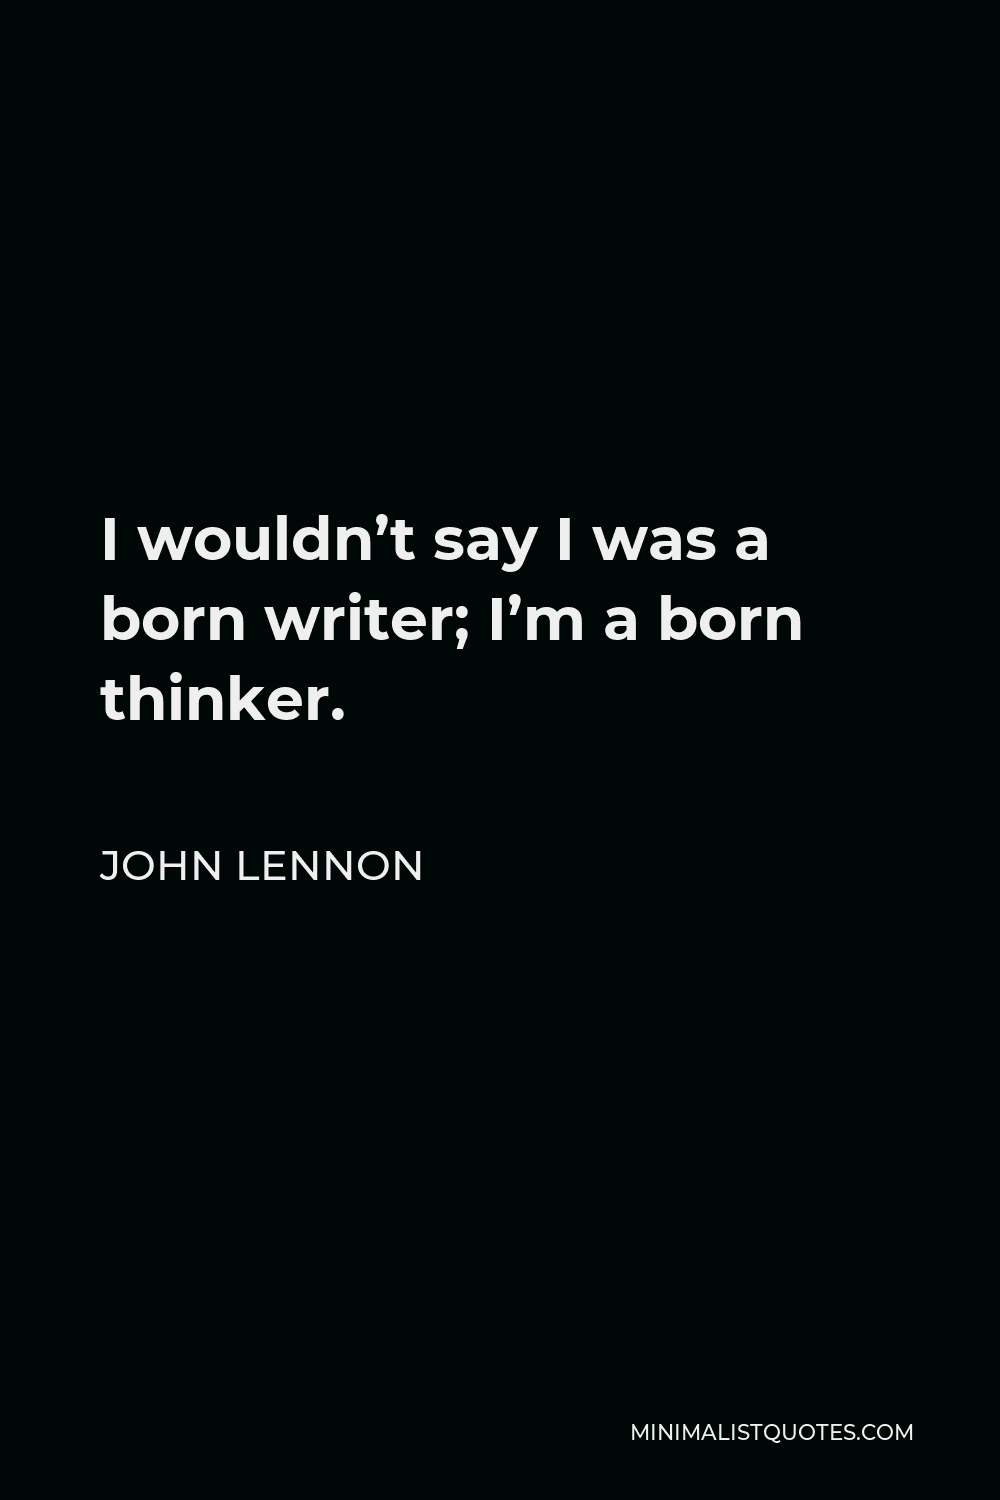 John Lennon Quote - I wouldn’t say I was a born writer; I’m a born thinker.